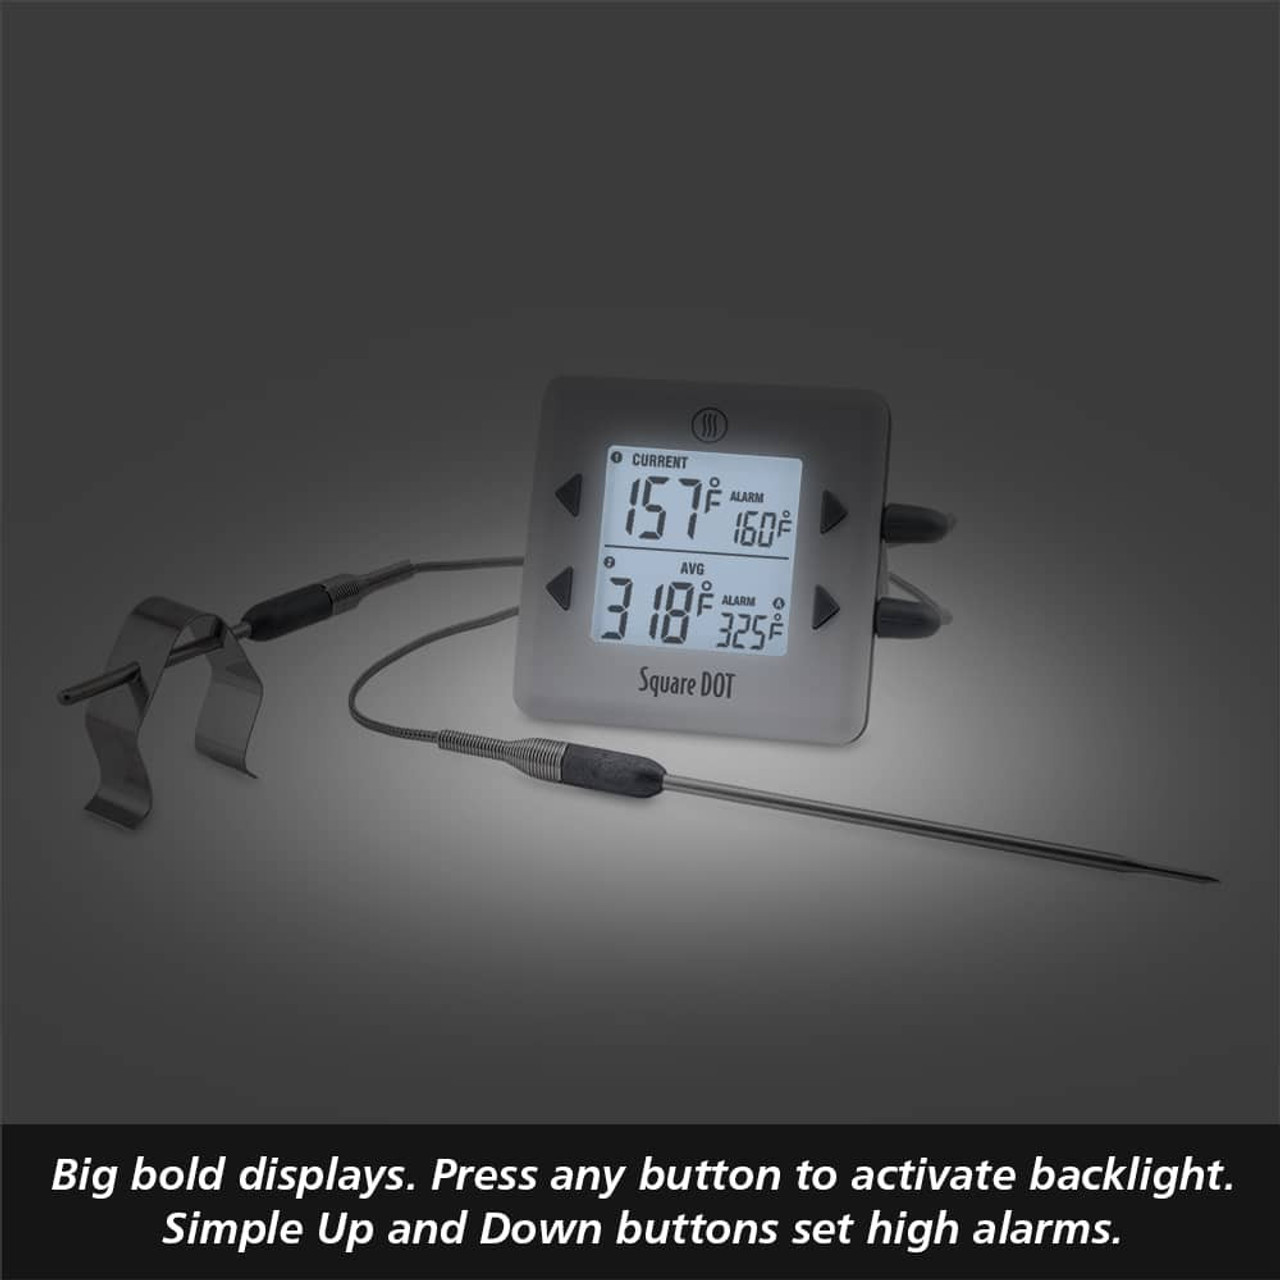 DOT® Digital Oven Alarm Thermometer